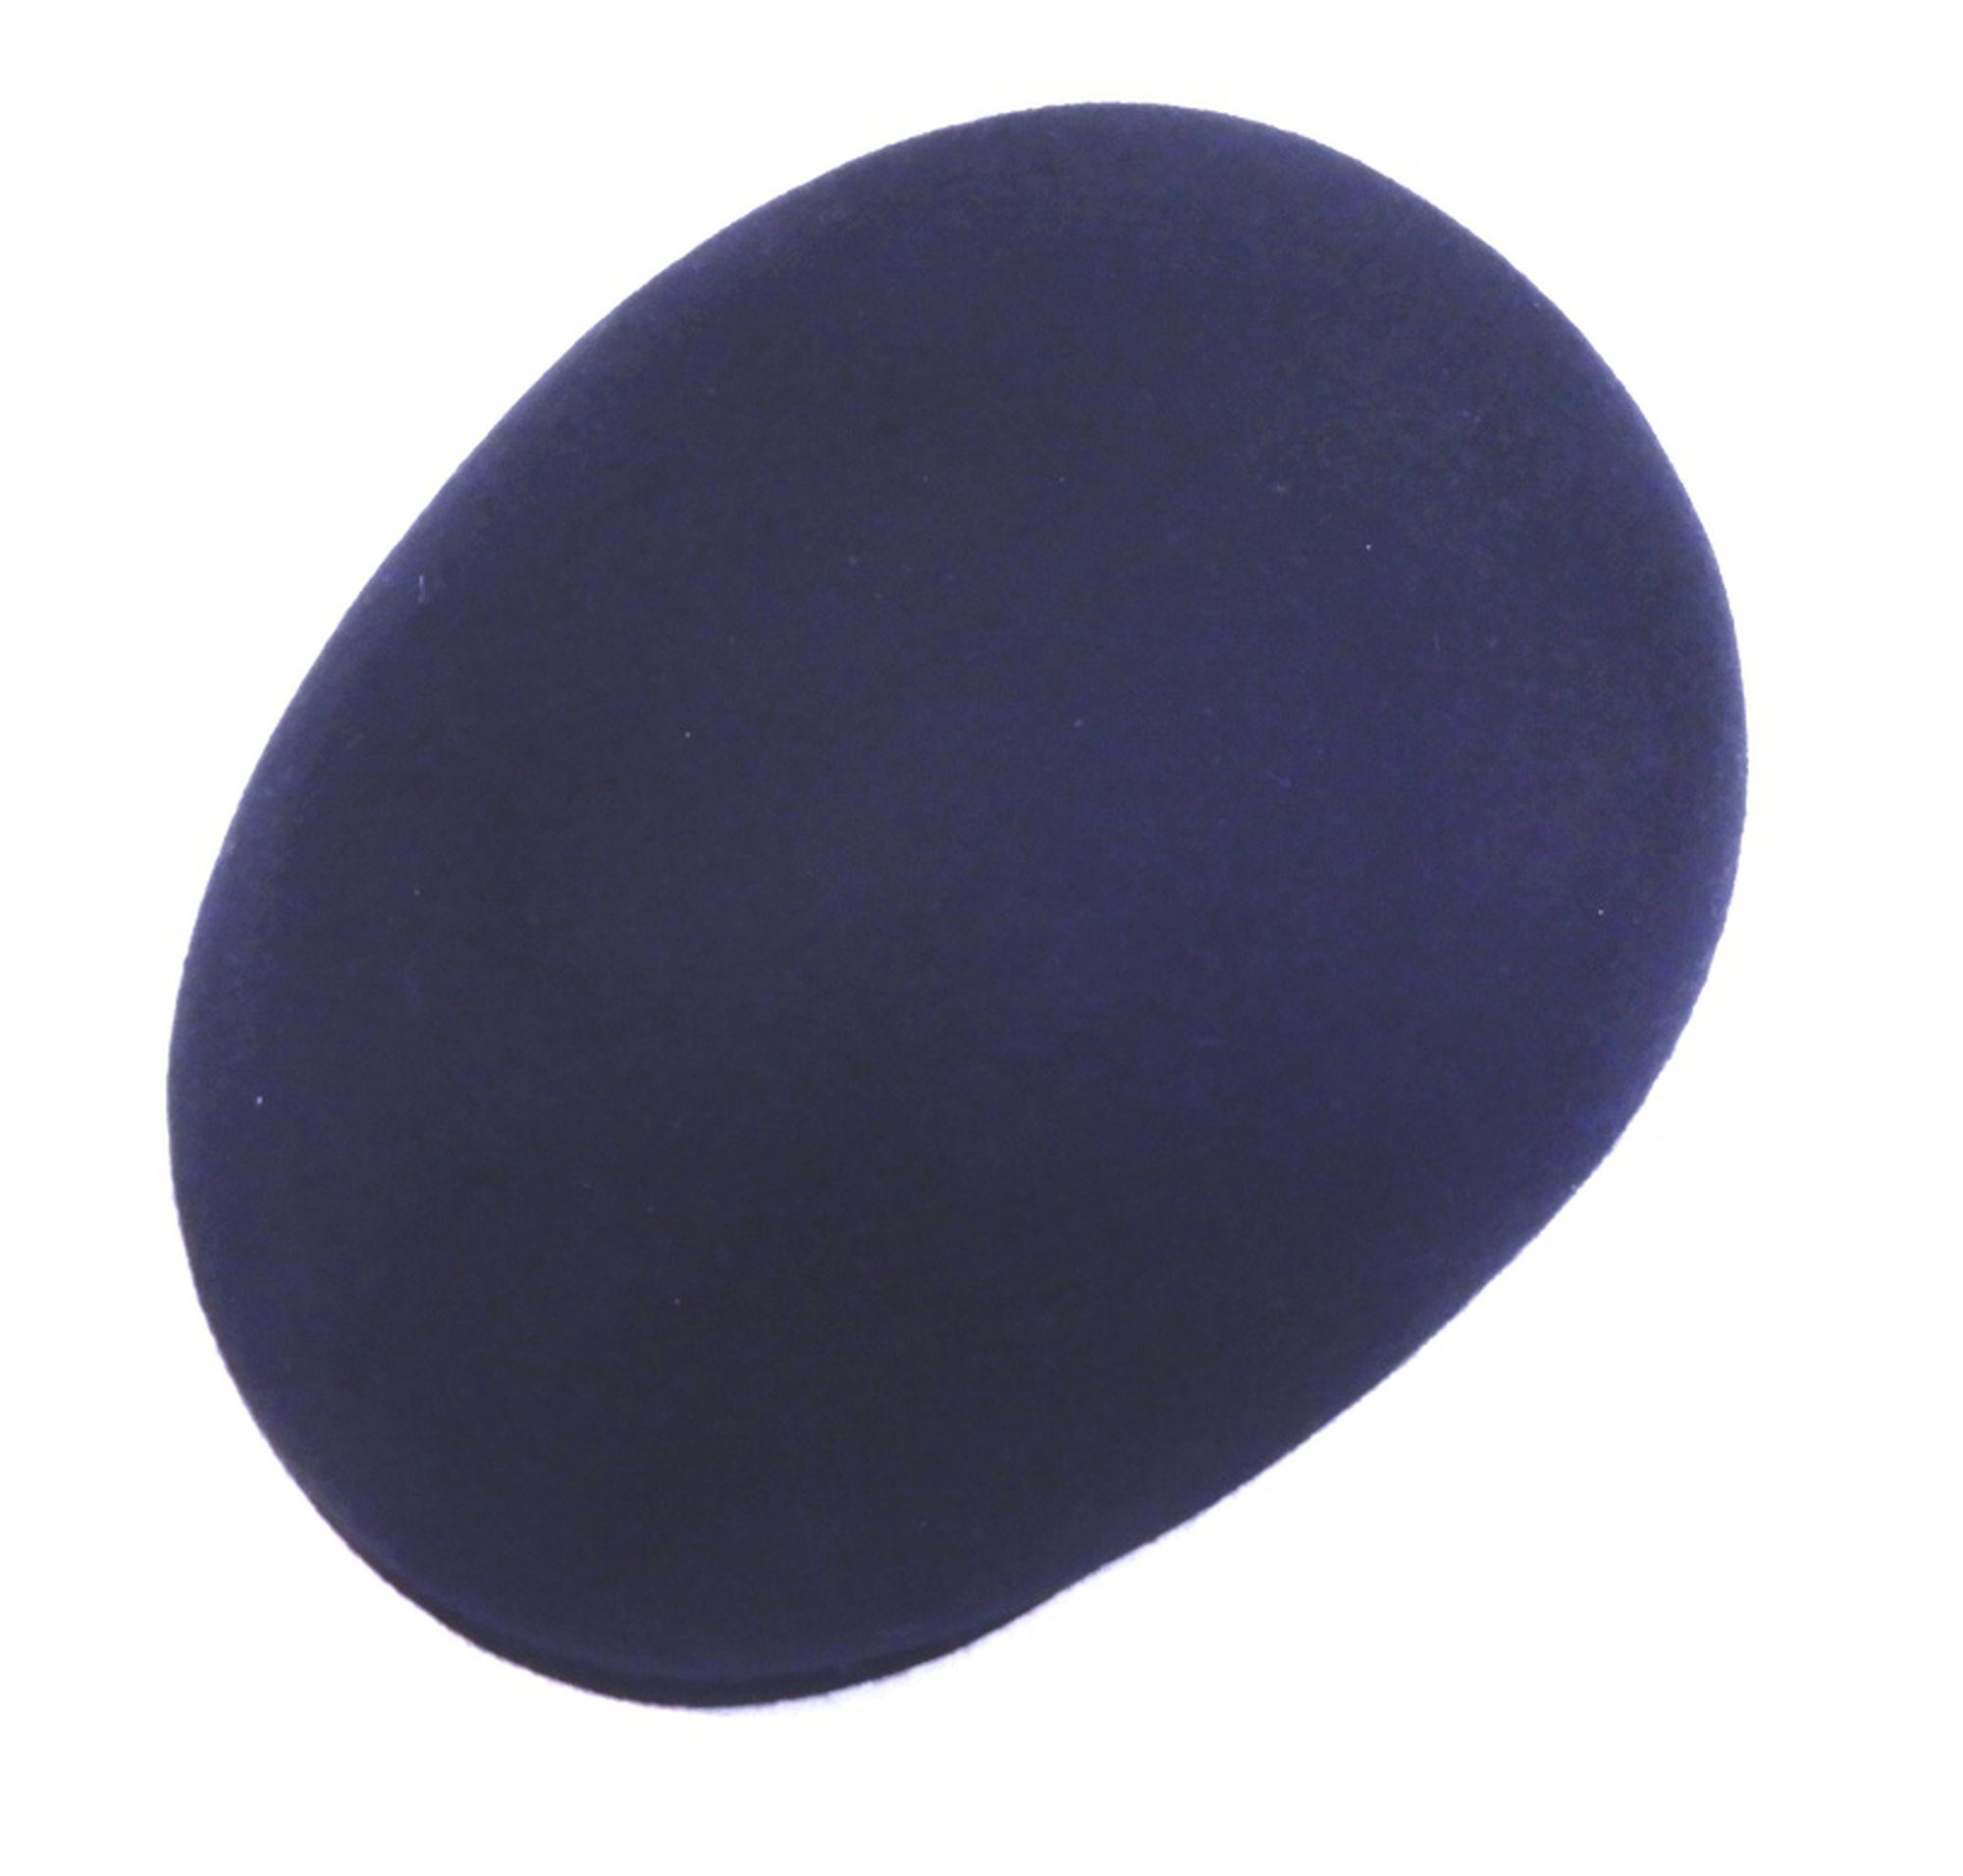 Wollfilz aus Chaplino hochwertigem Cap dunkelblau Flat